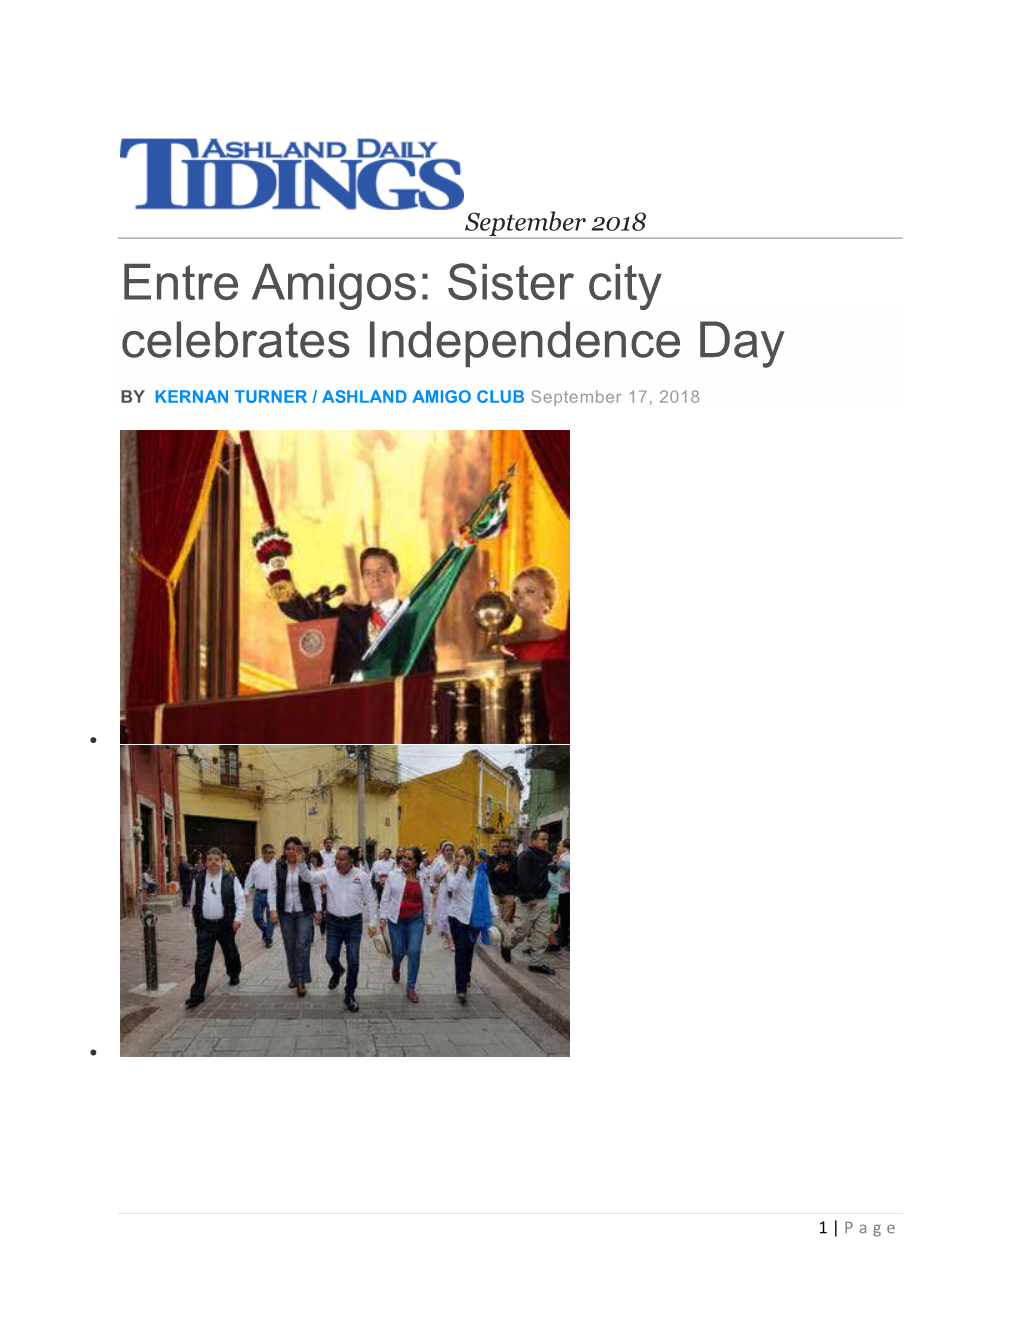 42 2018Sept17 Sister City Celebrates Independenceday